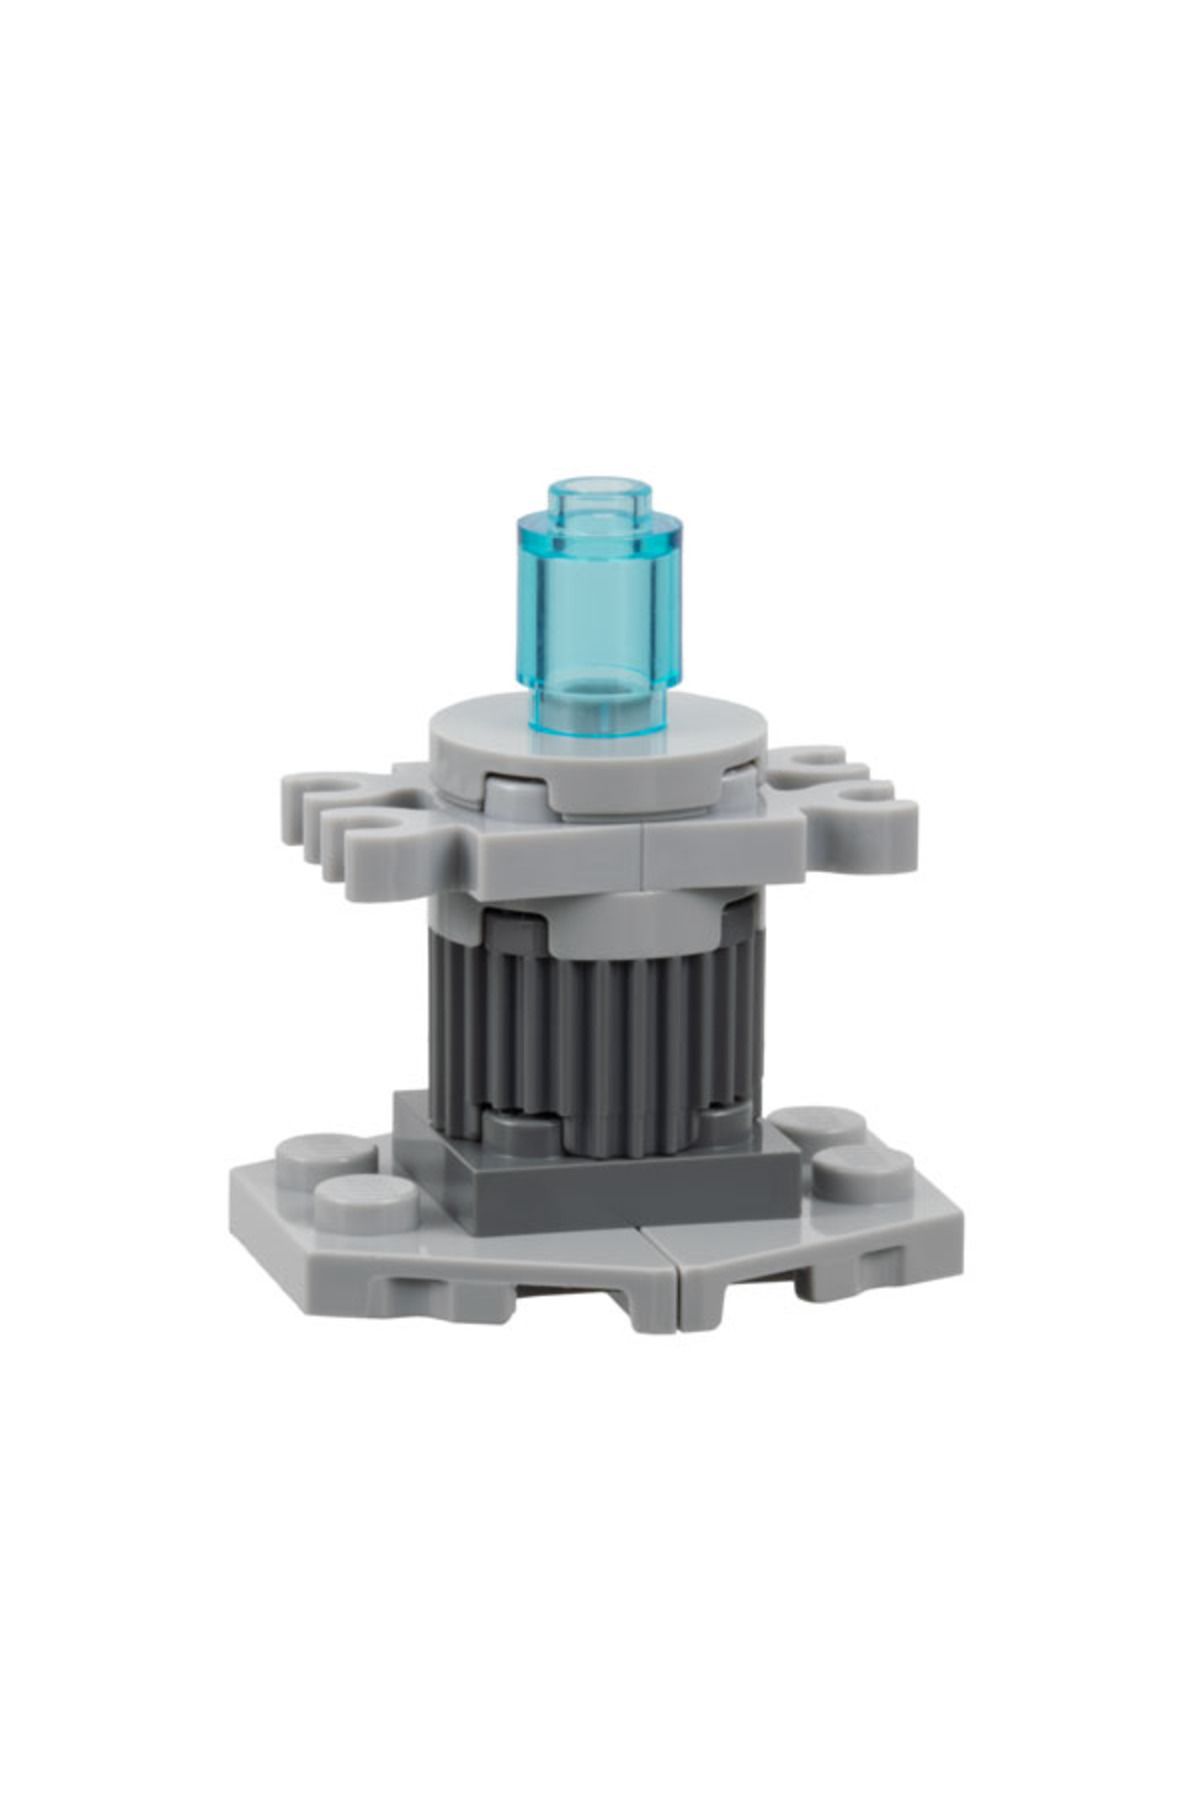 LEGO ریزساختارهای انتقام جویان روز پانزدهم ایستگاه راکتور قوس